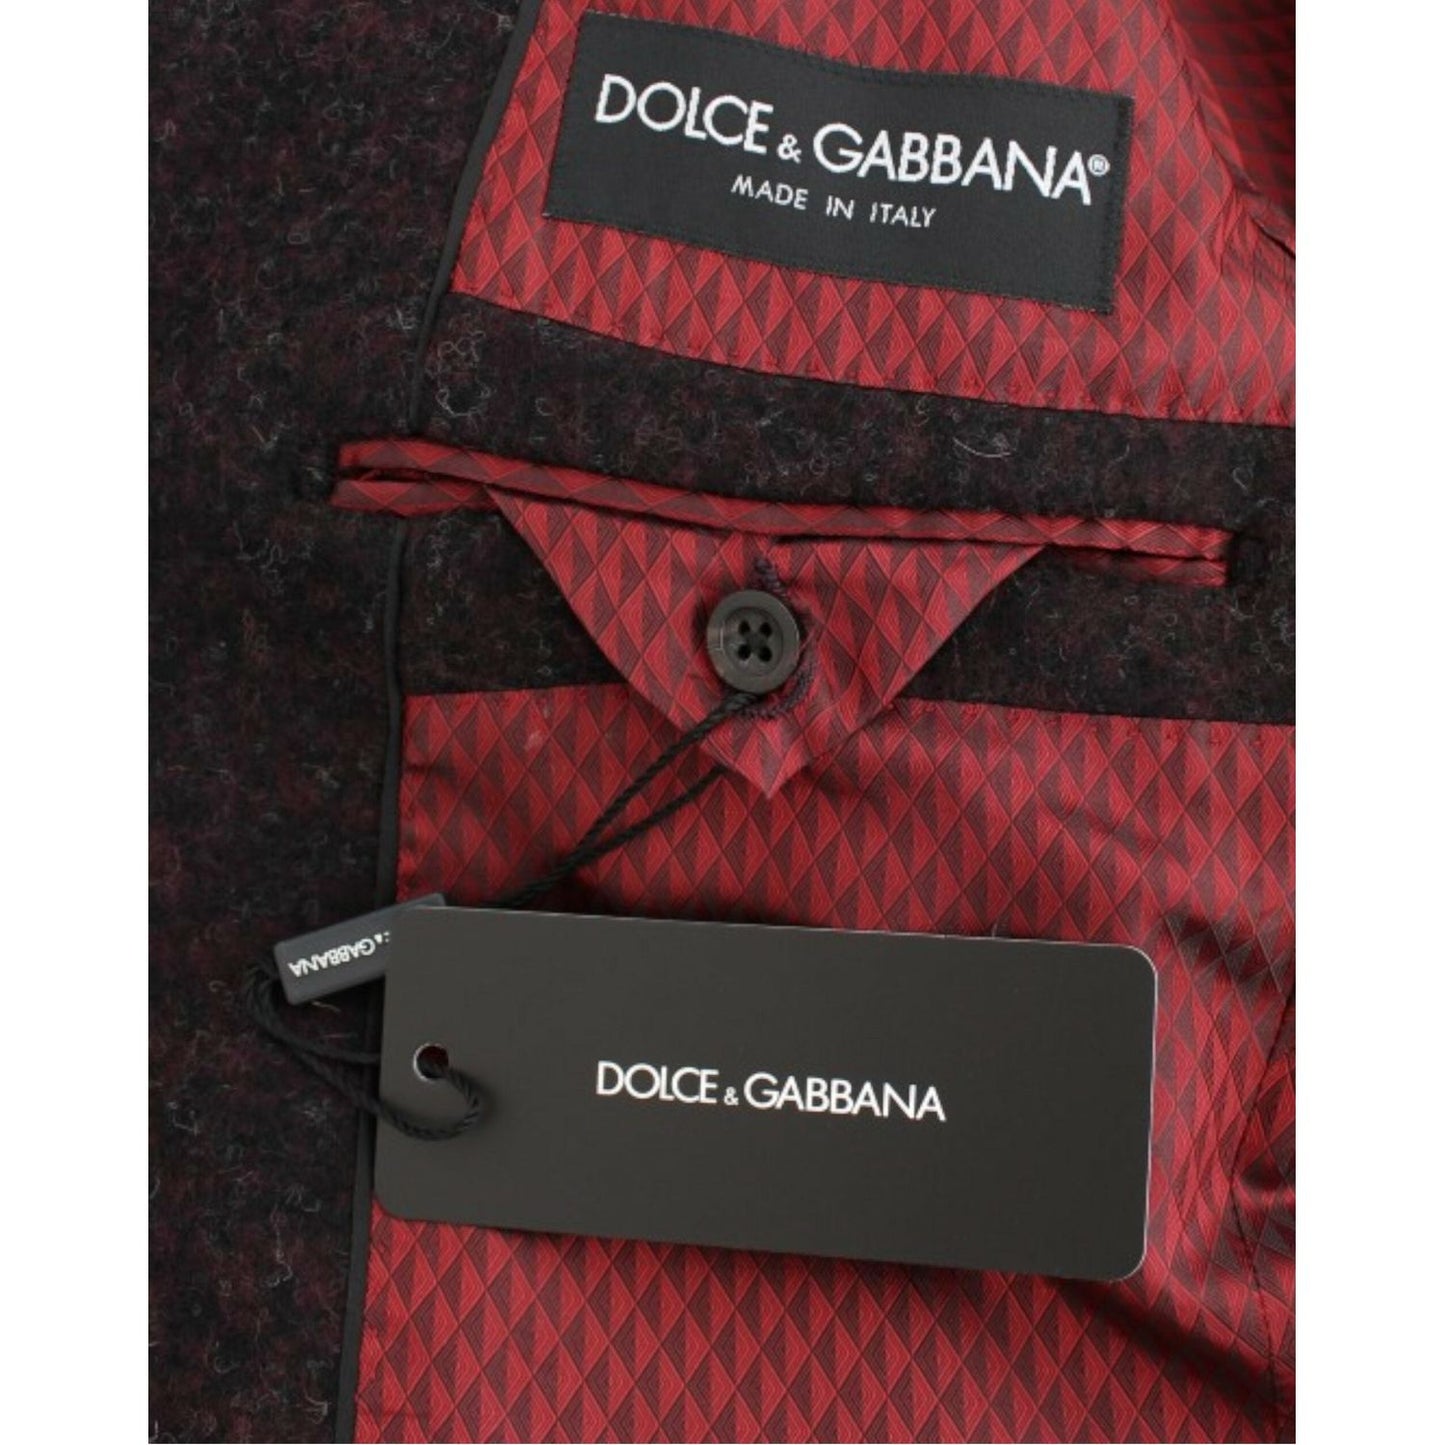 Dolce & Gabbana Bordeaux Alpaga Two-Button Blazer Jacket bordeaux-alpaga-two-button-blazer 12462-bordeaux-alpaga-two-button-blazer-10-scaled-c8ce5fc1-b62.jpg